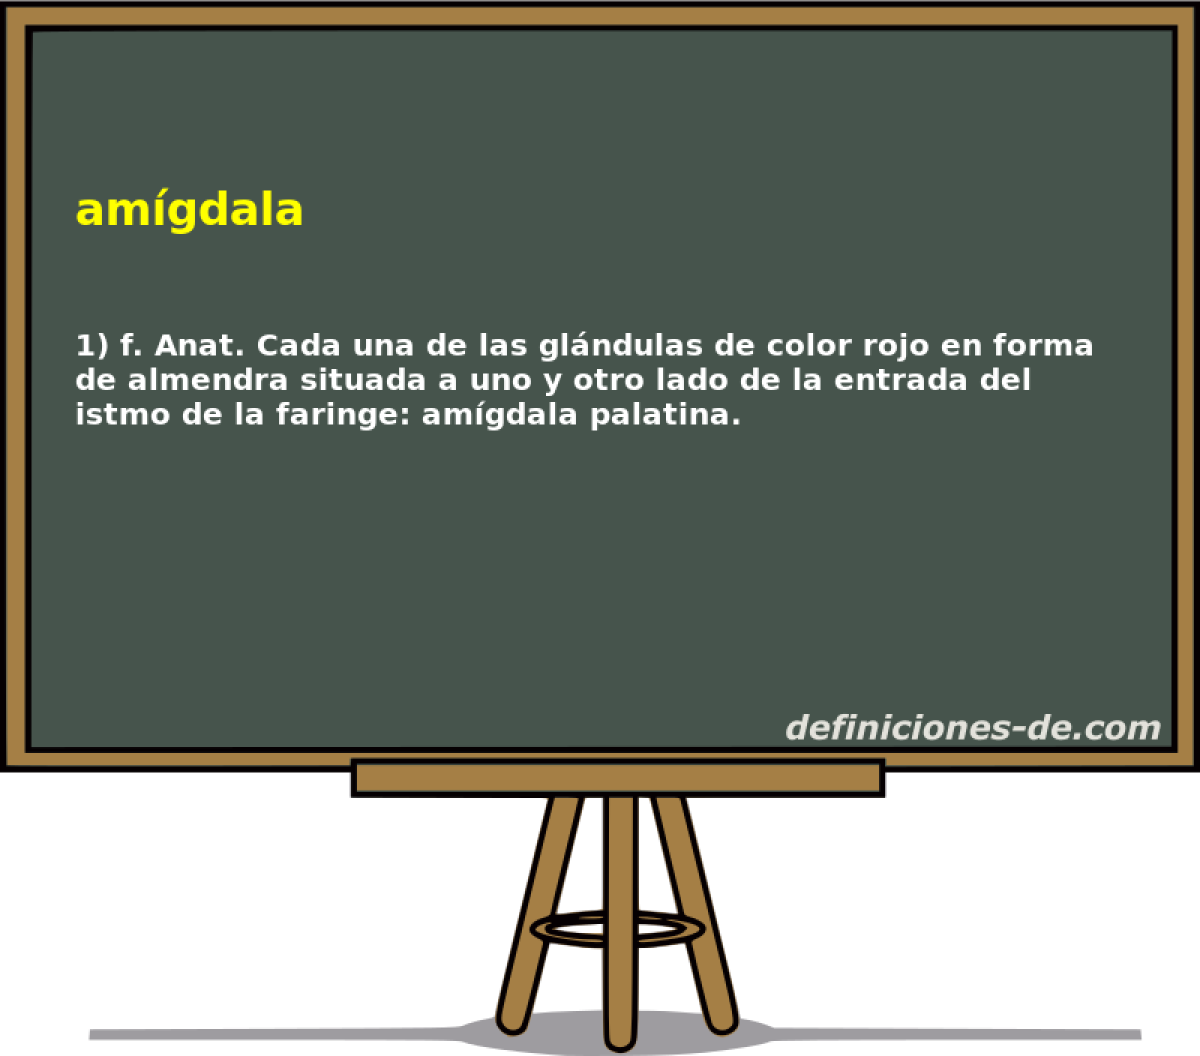 amgdala 